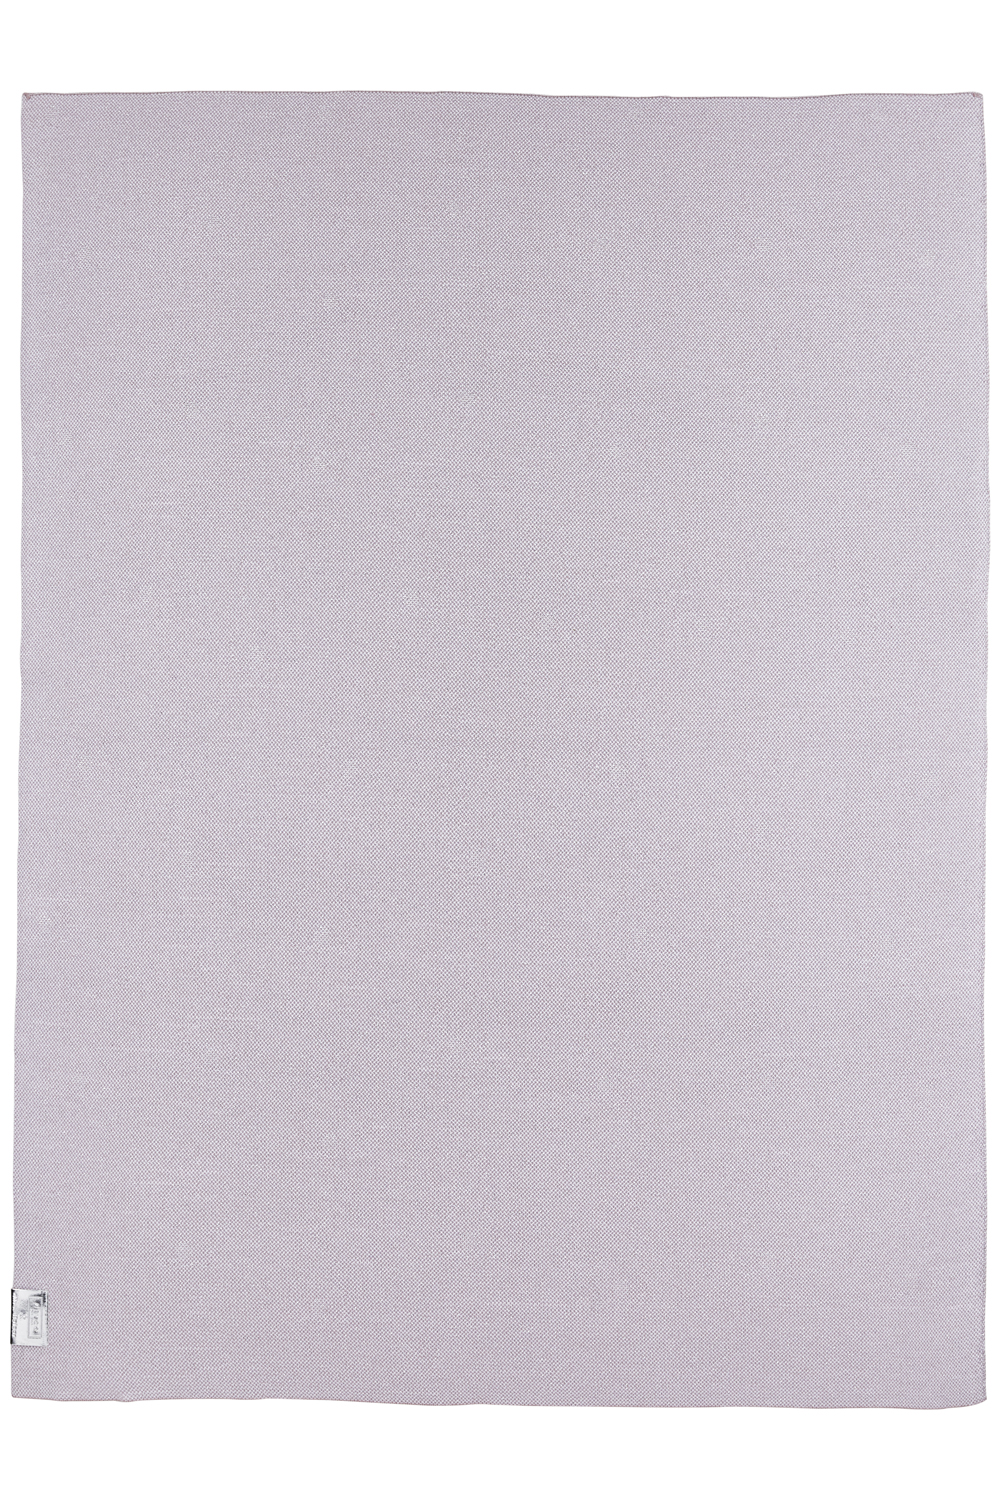 Ledikant deken Rabbit - lilac - 100x150cm